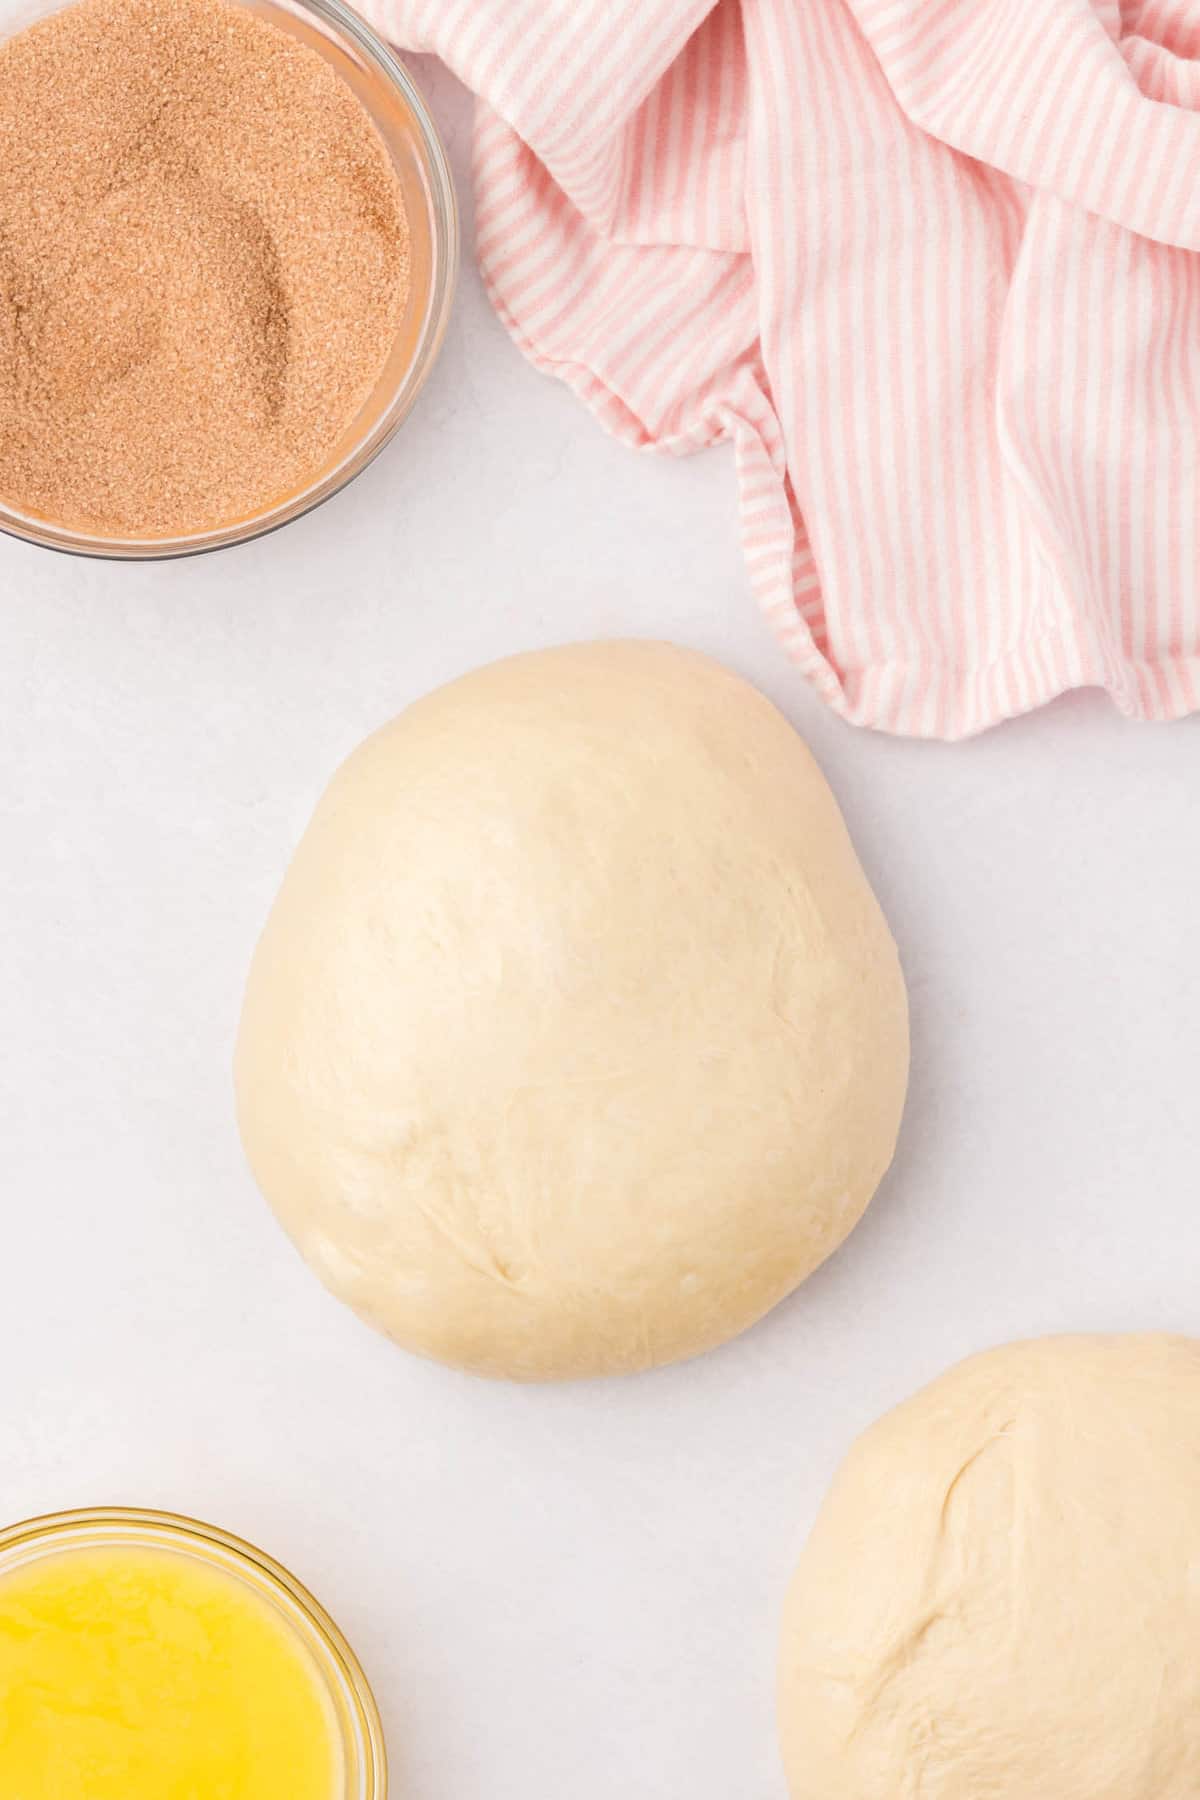 Dough for Cinnamon Swirl Bread rising on counter